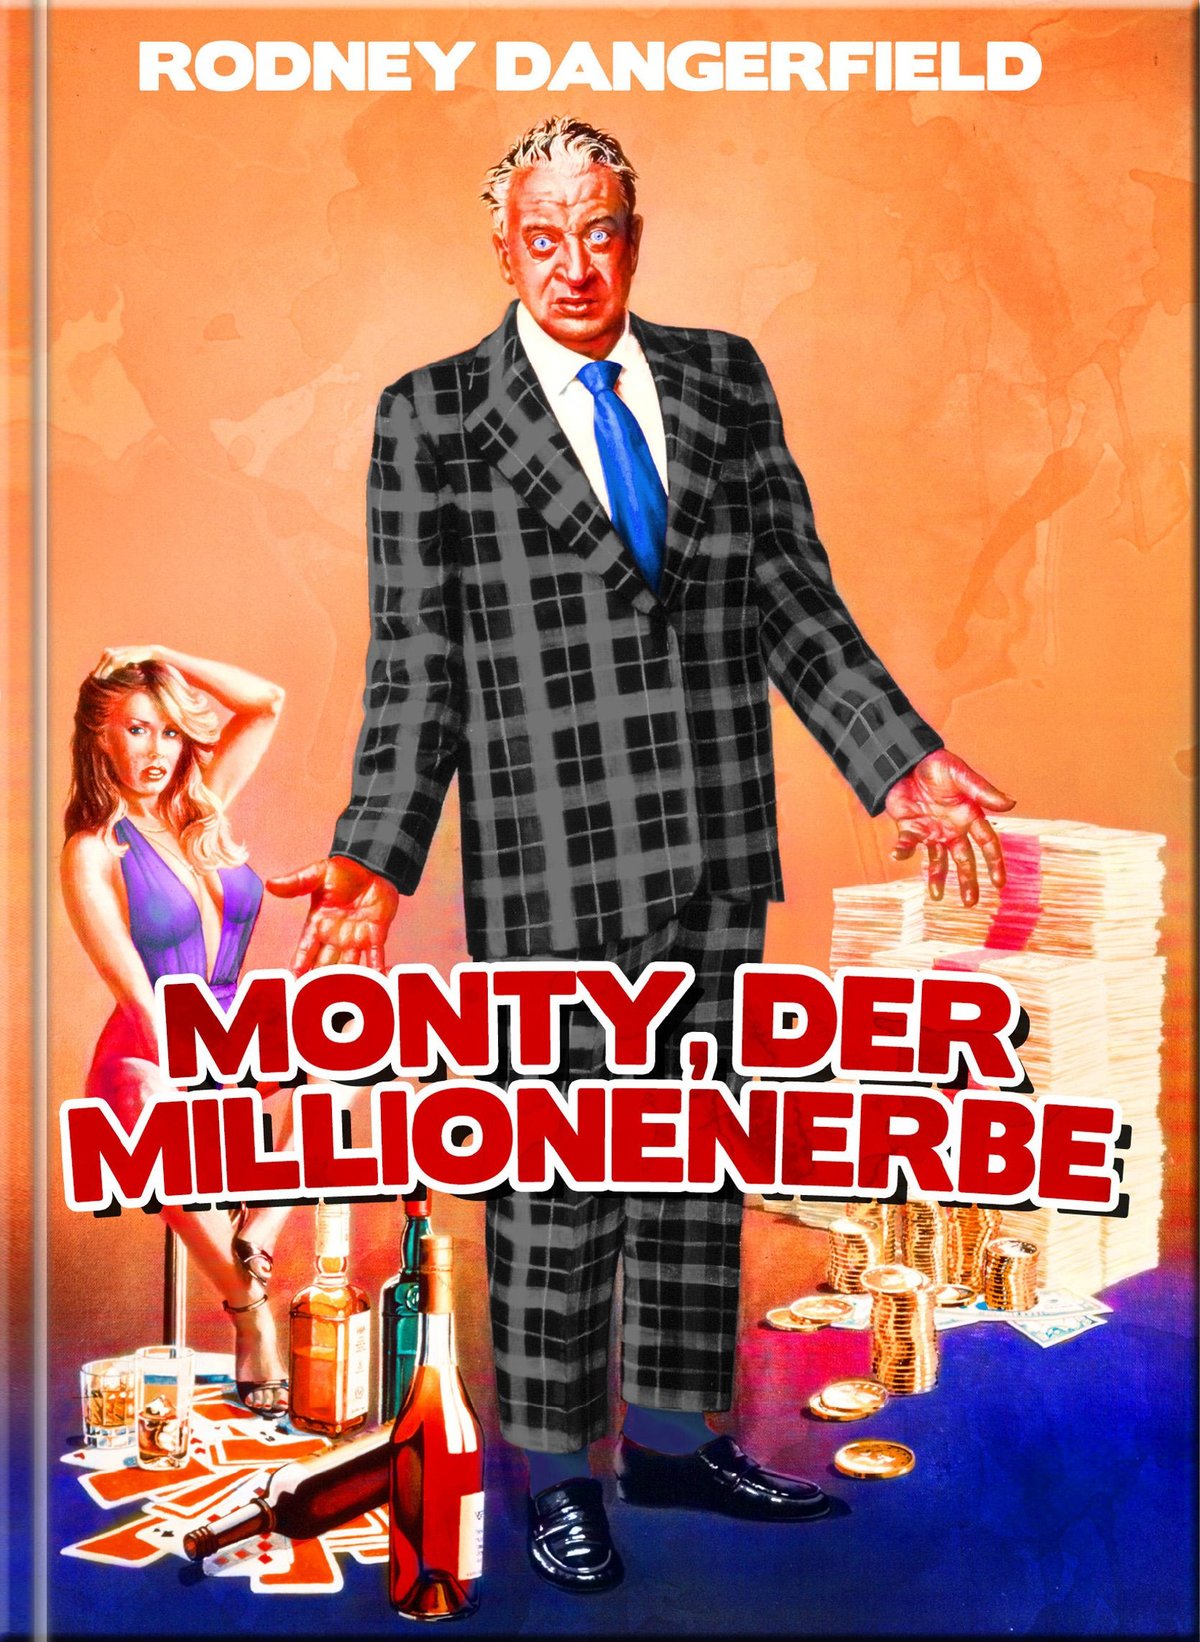 Monty der Millionenerbe - Limited Mediabook Edition (DVD+blu-ray)